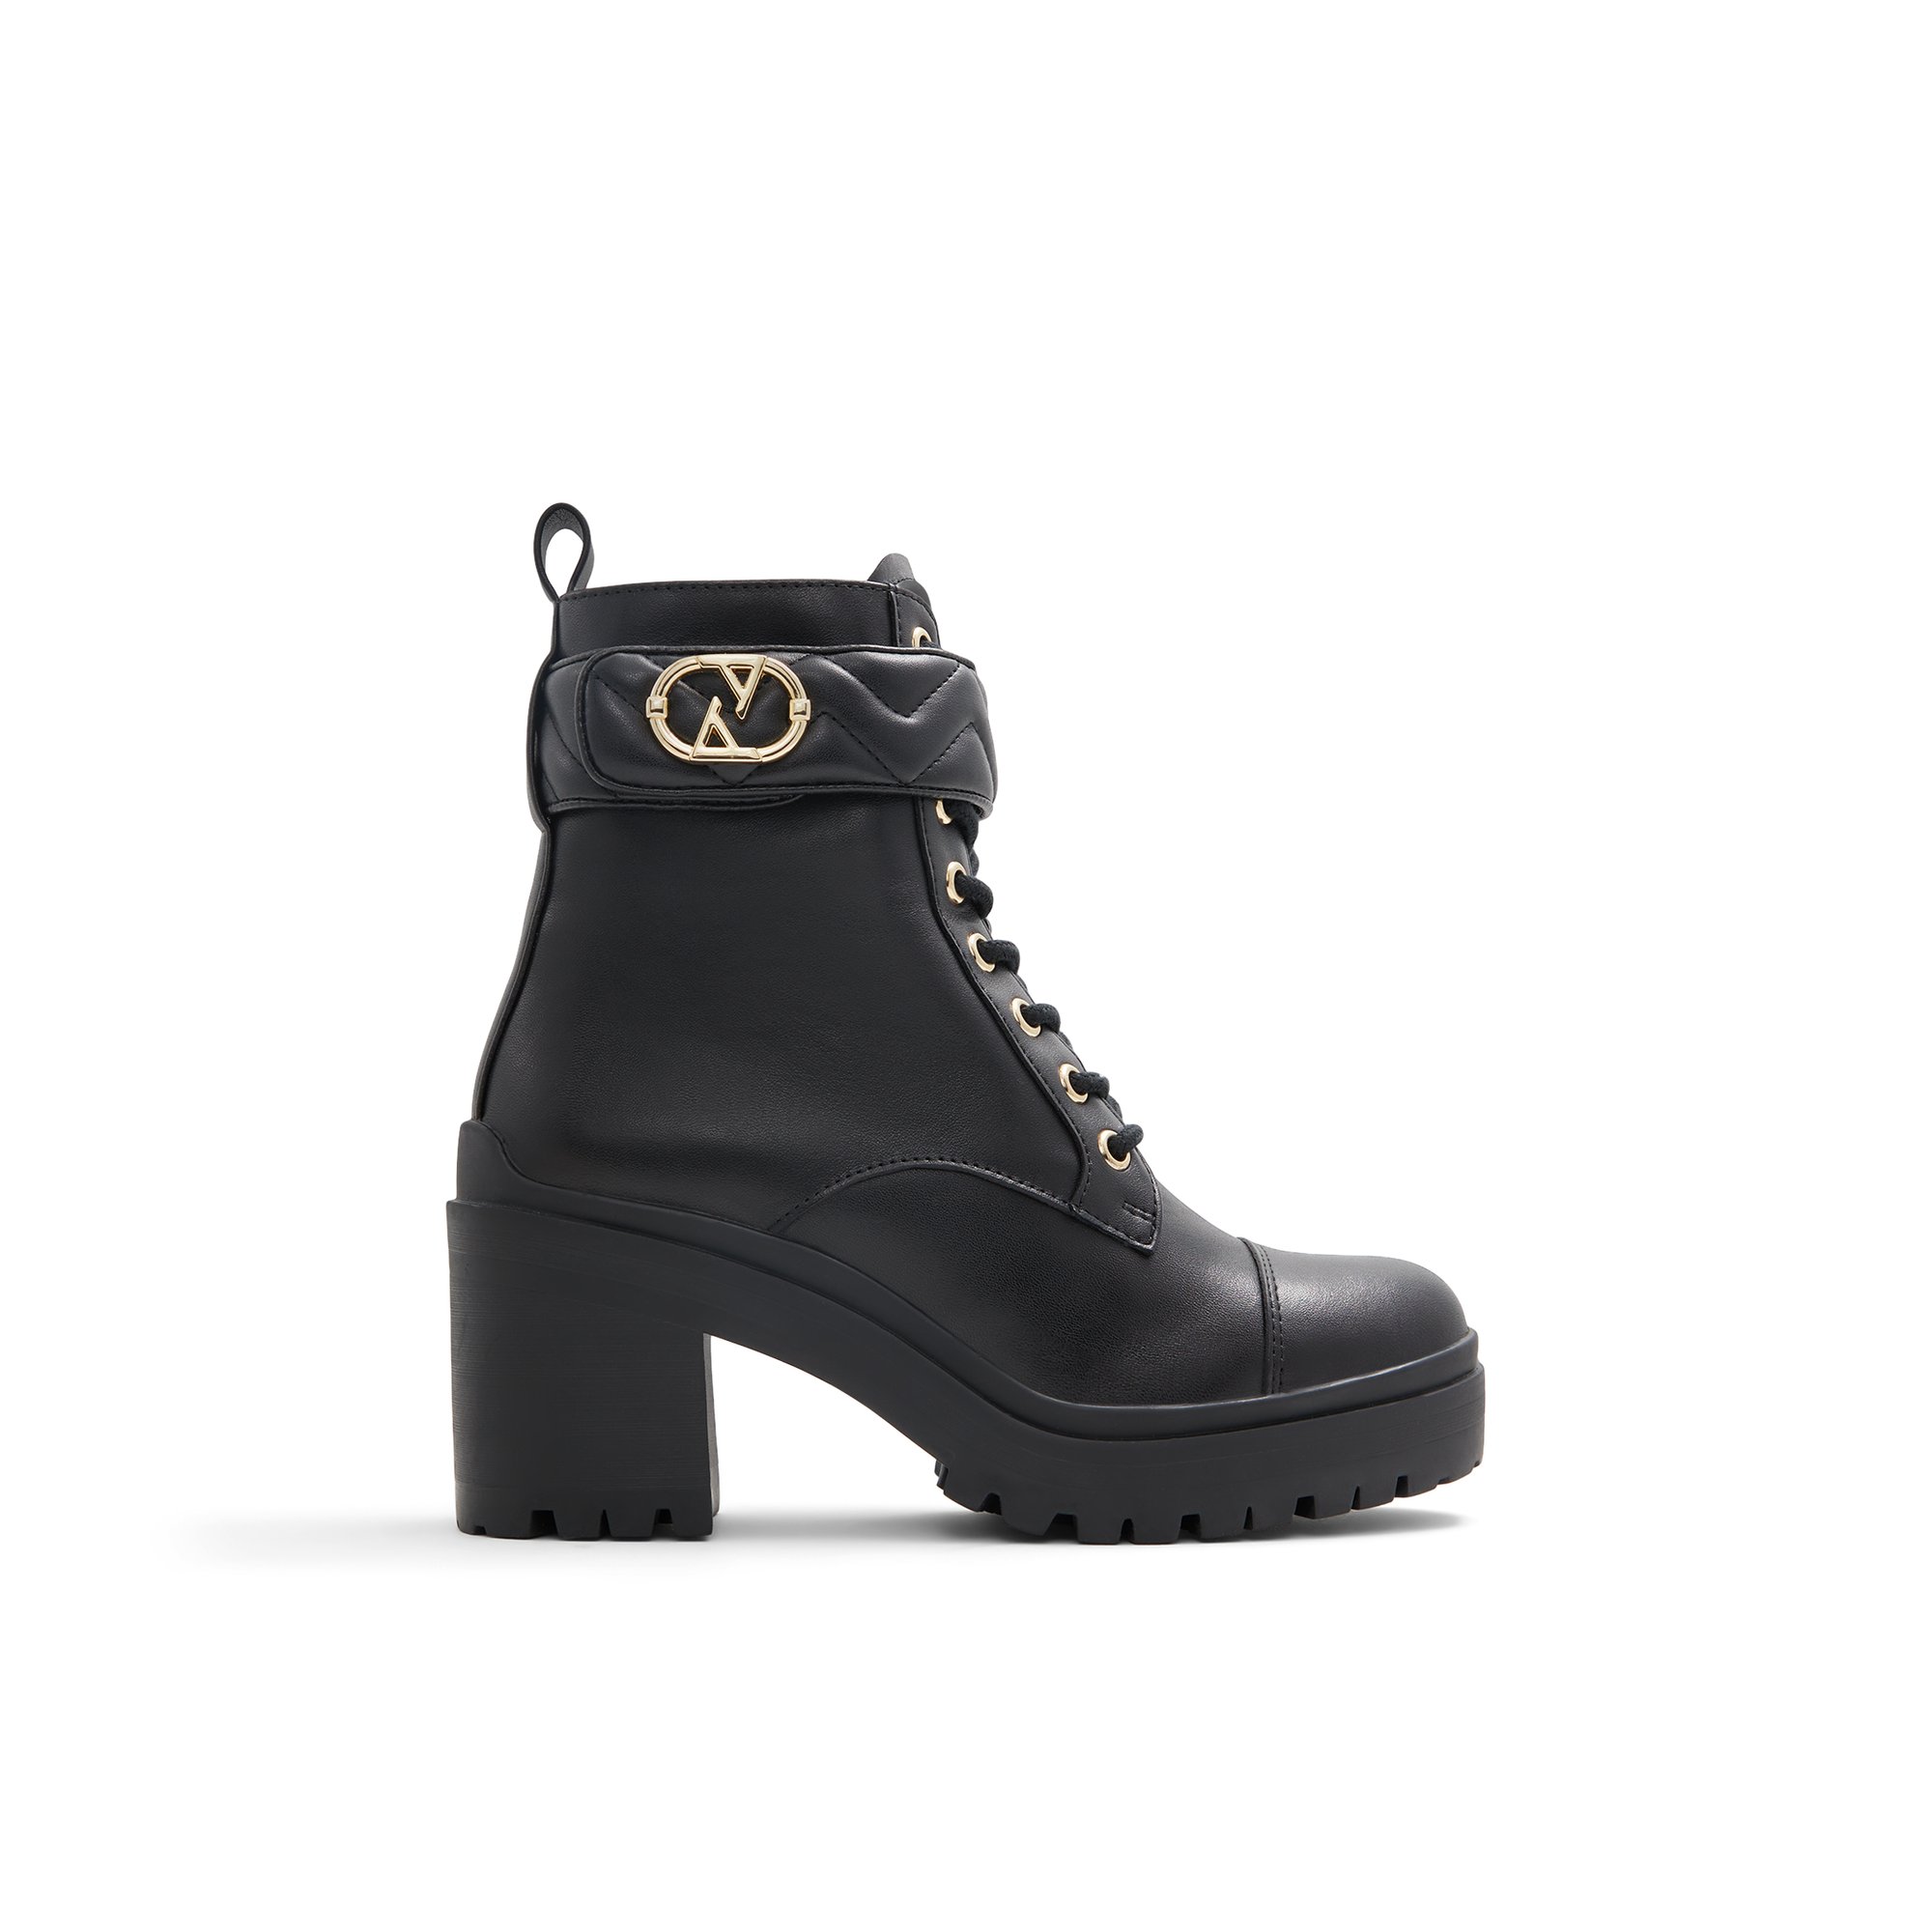 ALDO Farerendar - Women's Boots Casual - Black